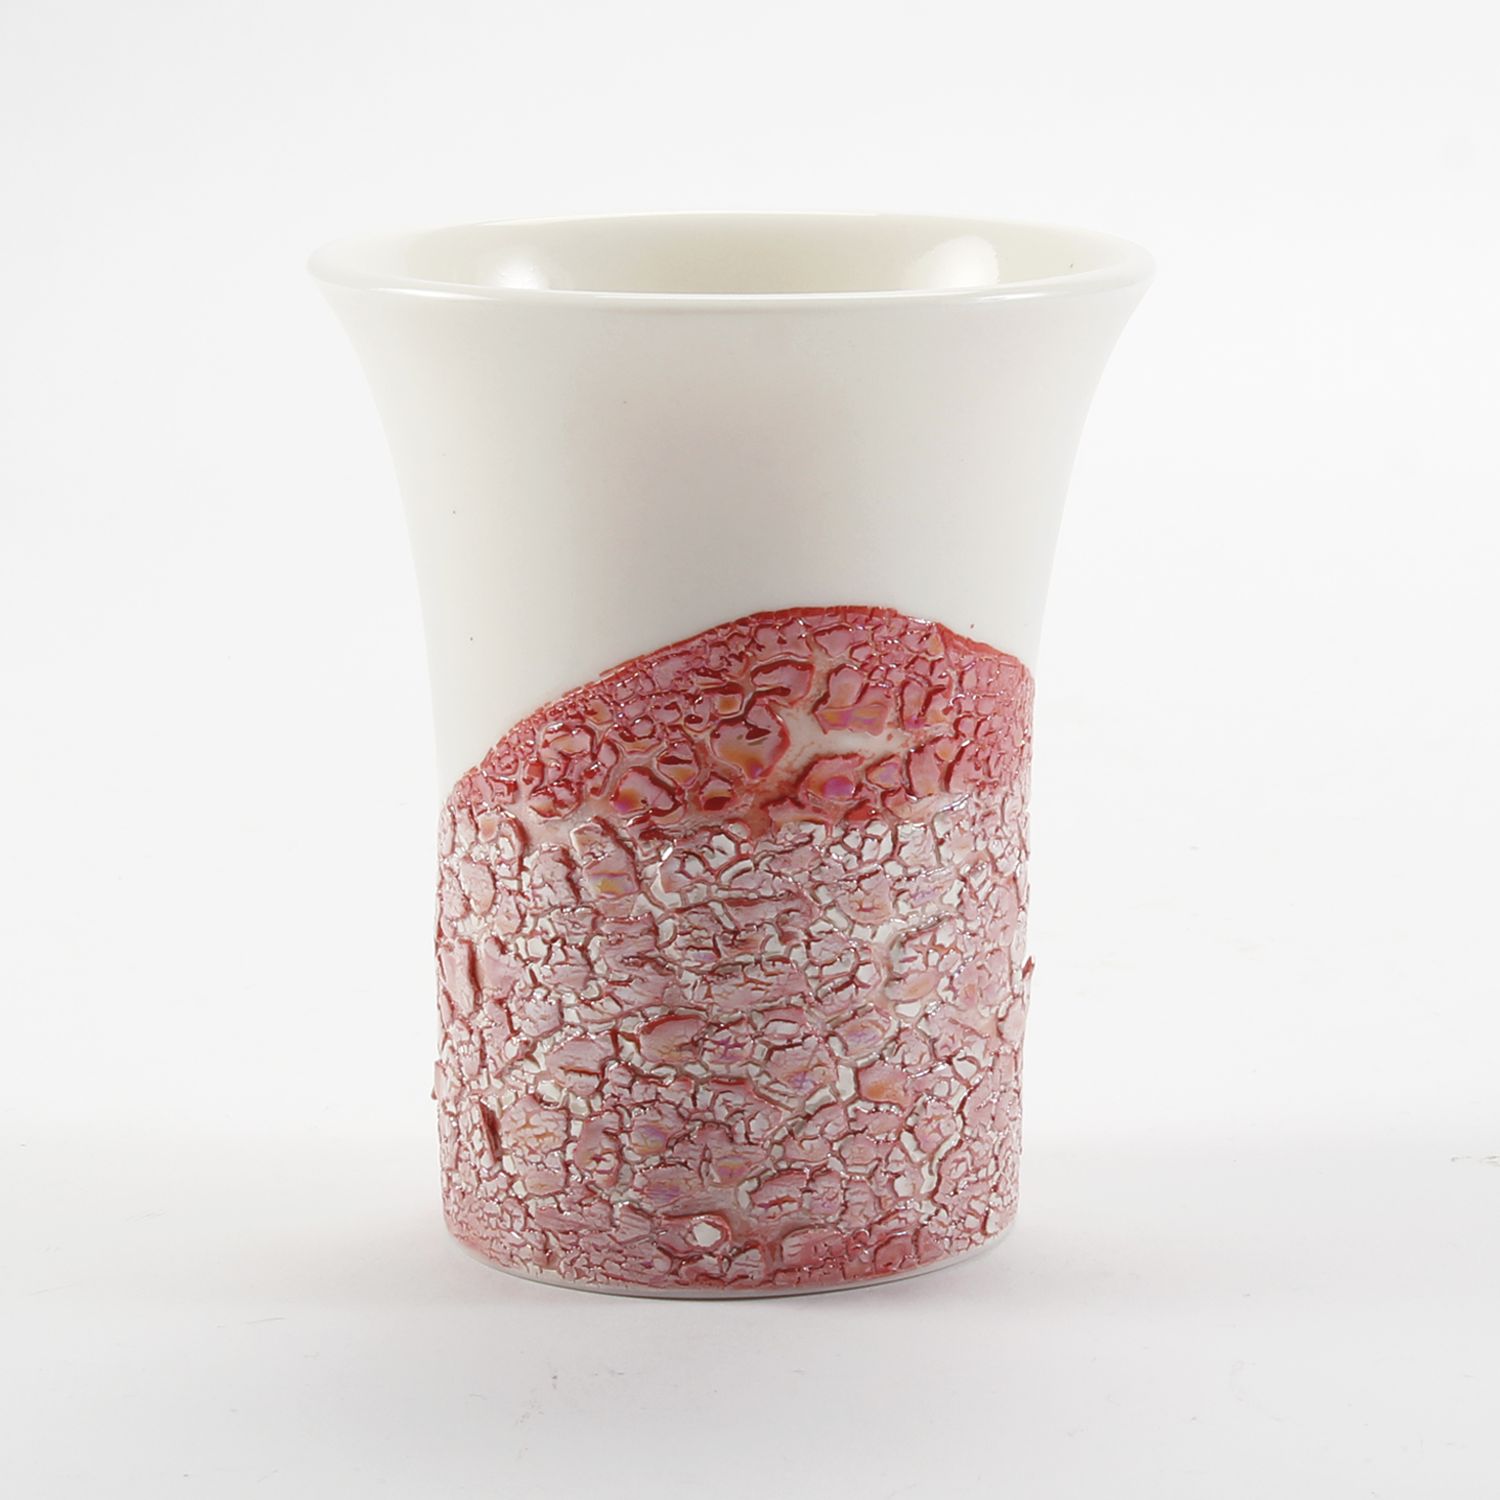 Cuir Ceramics: Cup/Vase Product Image 4 of 4